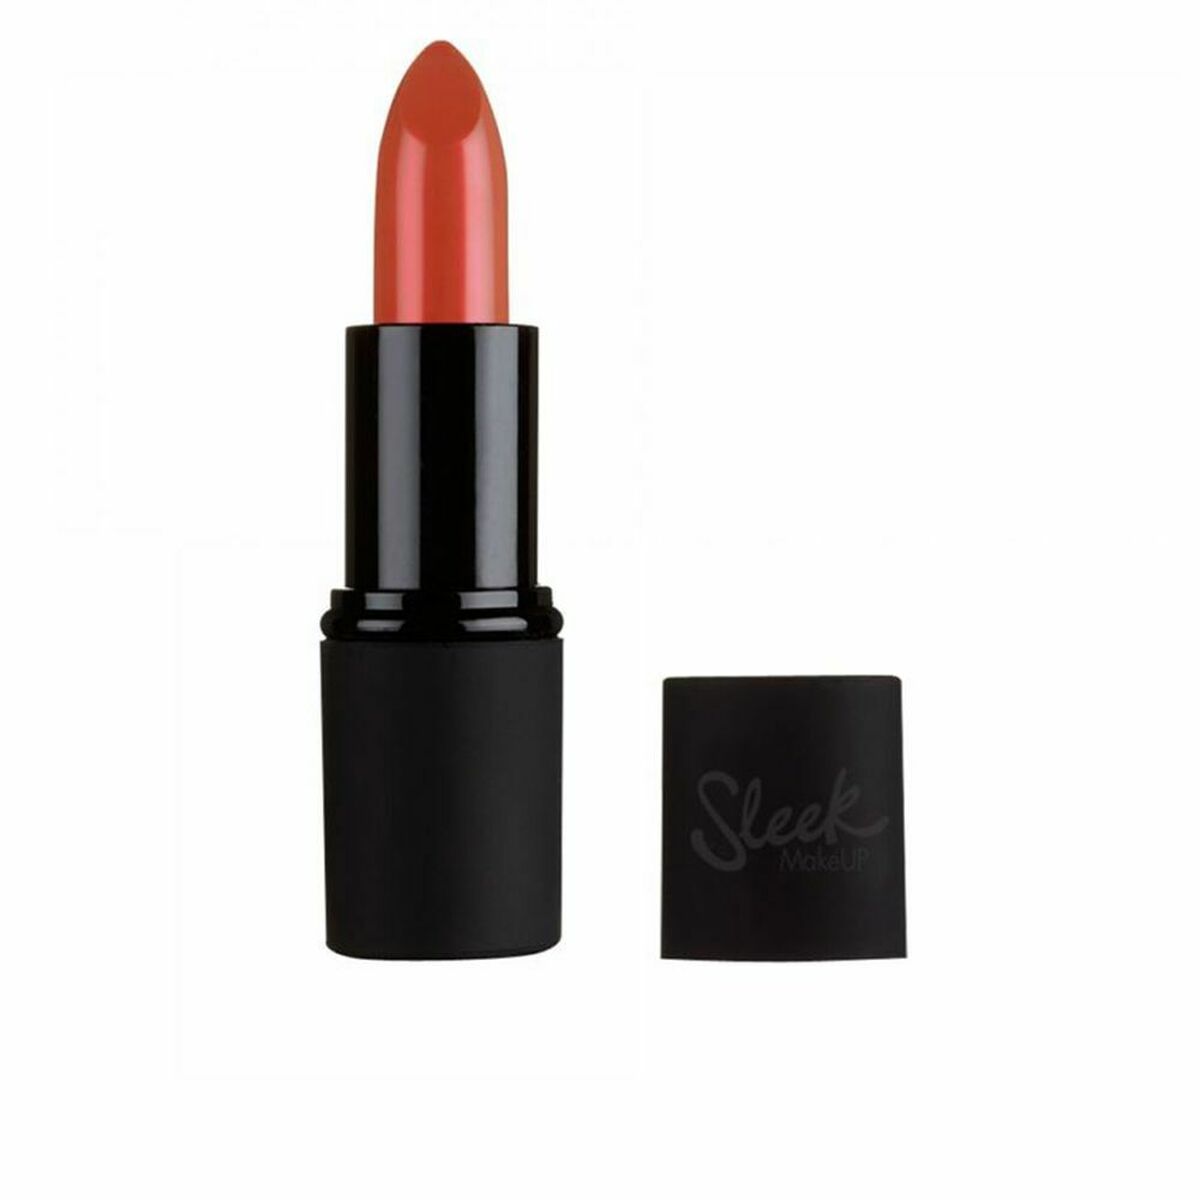 Lipstick Sleek True Color sucumbir (3,5 g)